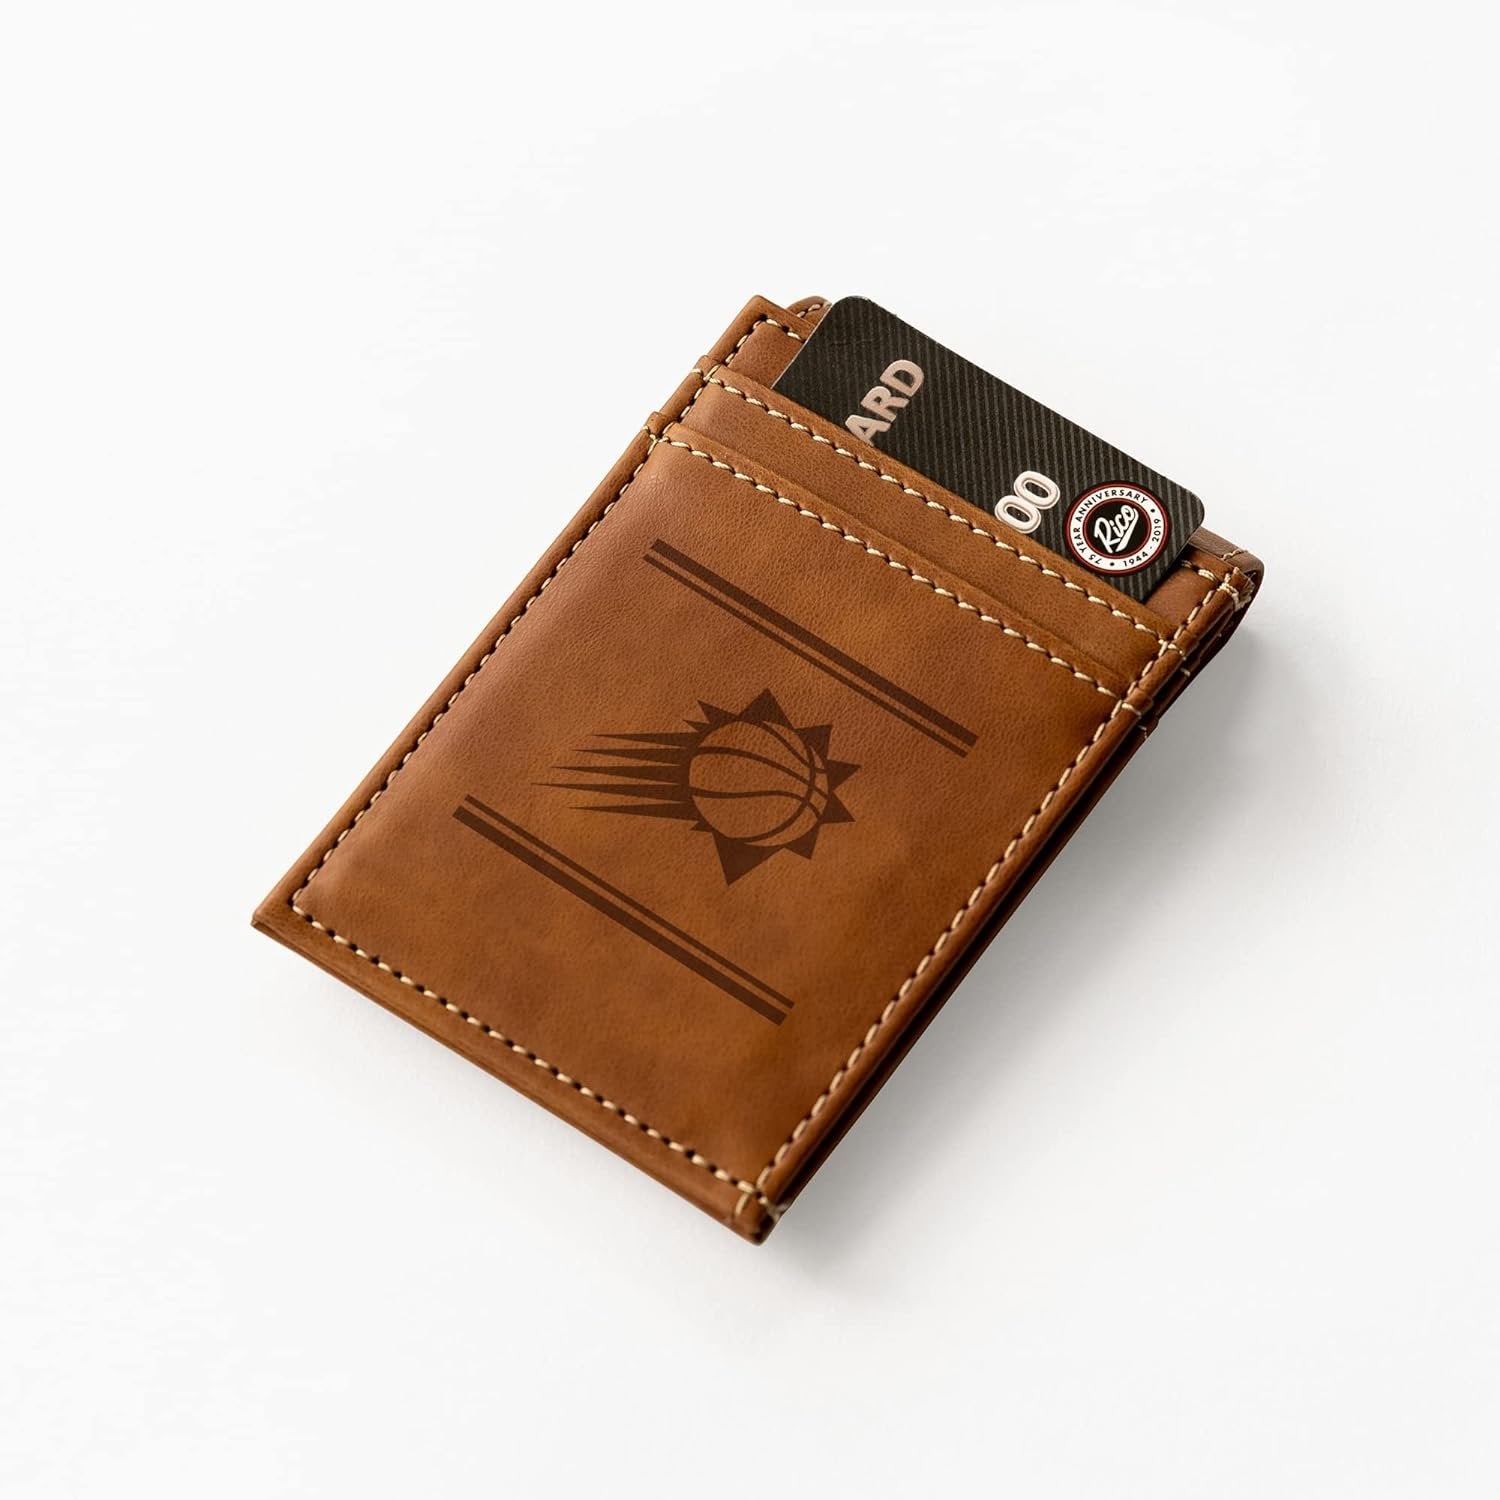 Phoenix Suns Premium Brown Leather Wallet, Front Pocket Magnetic Money Clip, Laser Engraved, Vegan